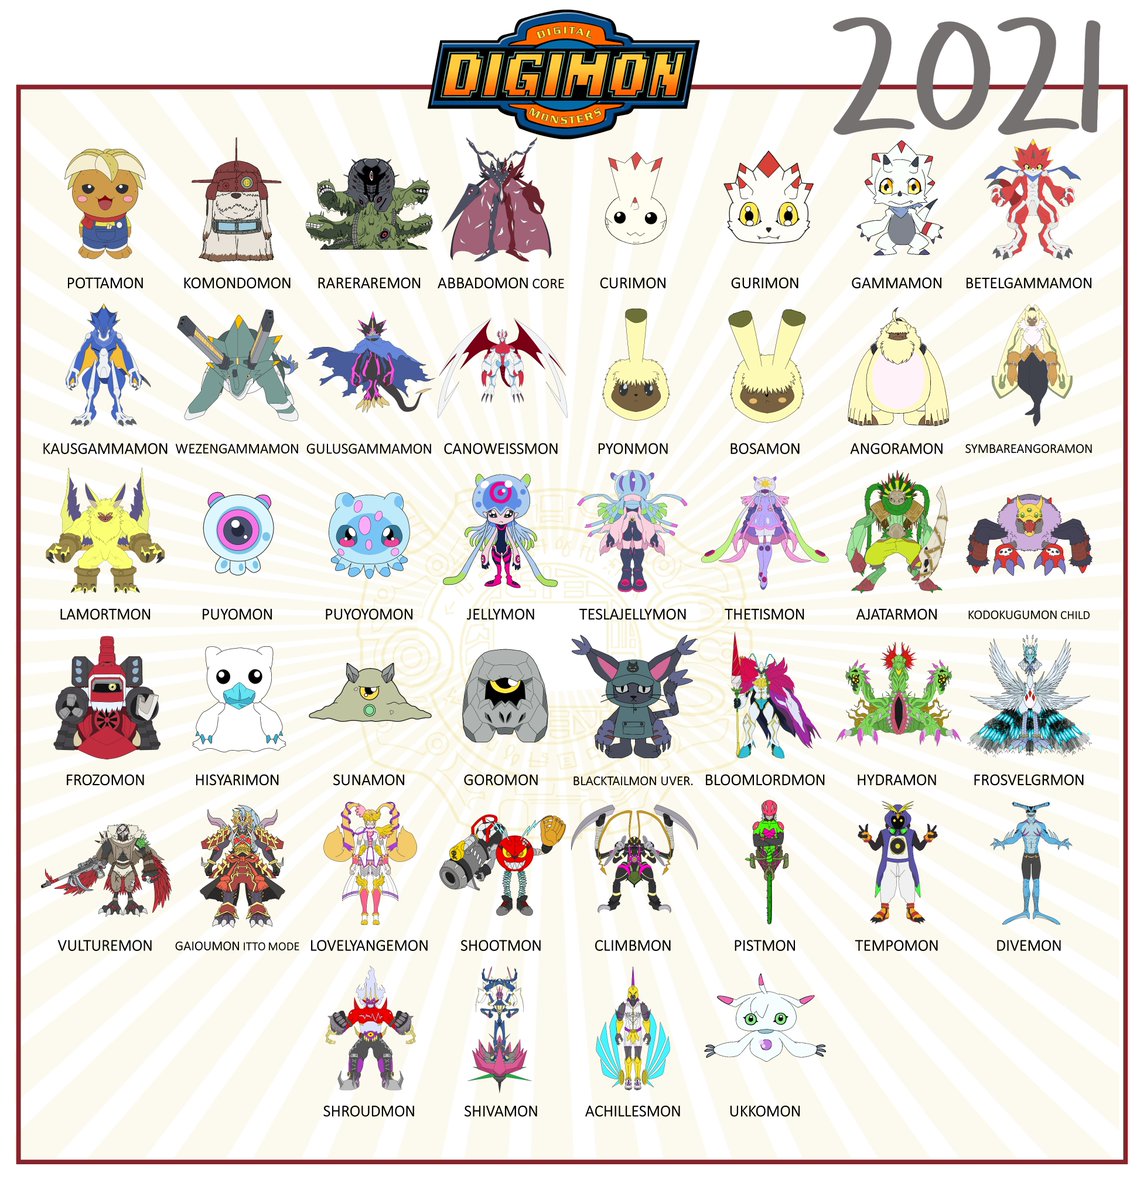 DIGIMON BY YEAR OF DEBUT: 2021
 ------------  
Only two years left. 👻😊

#Digimon #Poster #Anime #Manga #デジモン #Pokemon #Arte #Art #Lineart #Draw #DigimonAdventure #Digimonghosgame #Gammamon #Vitalbracelet #DigimonSeekers